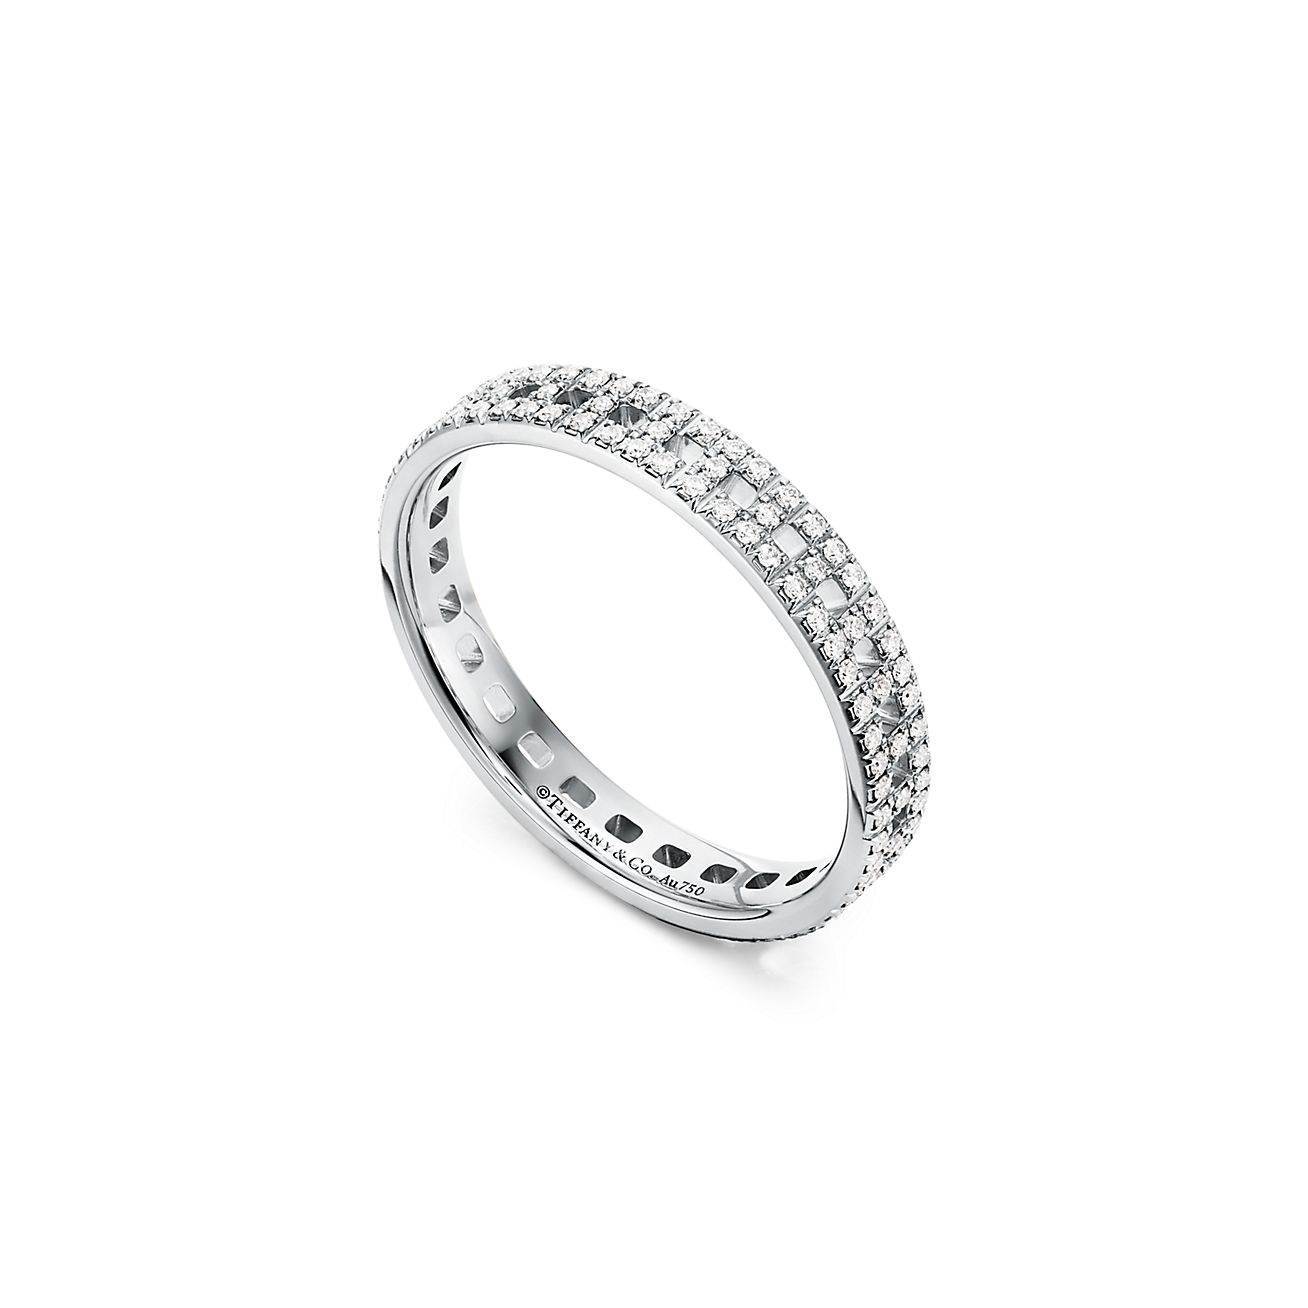 Tiffany T True narrow ring in 18k white 